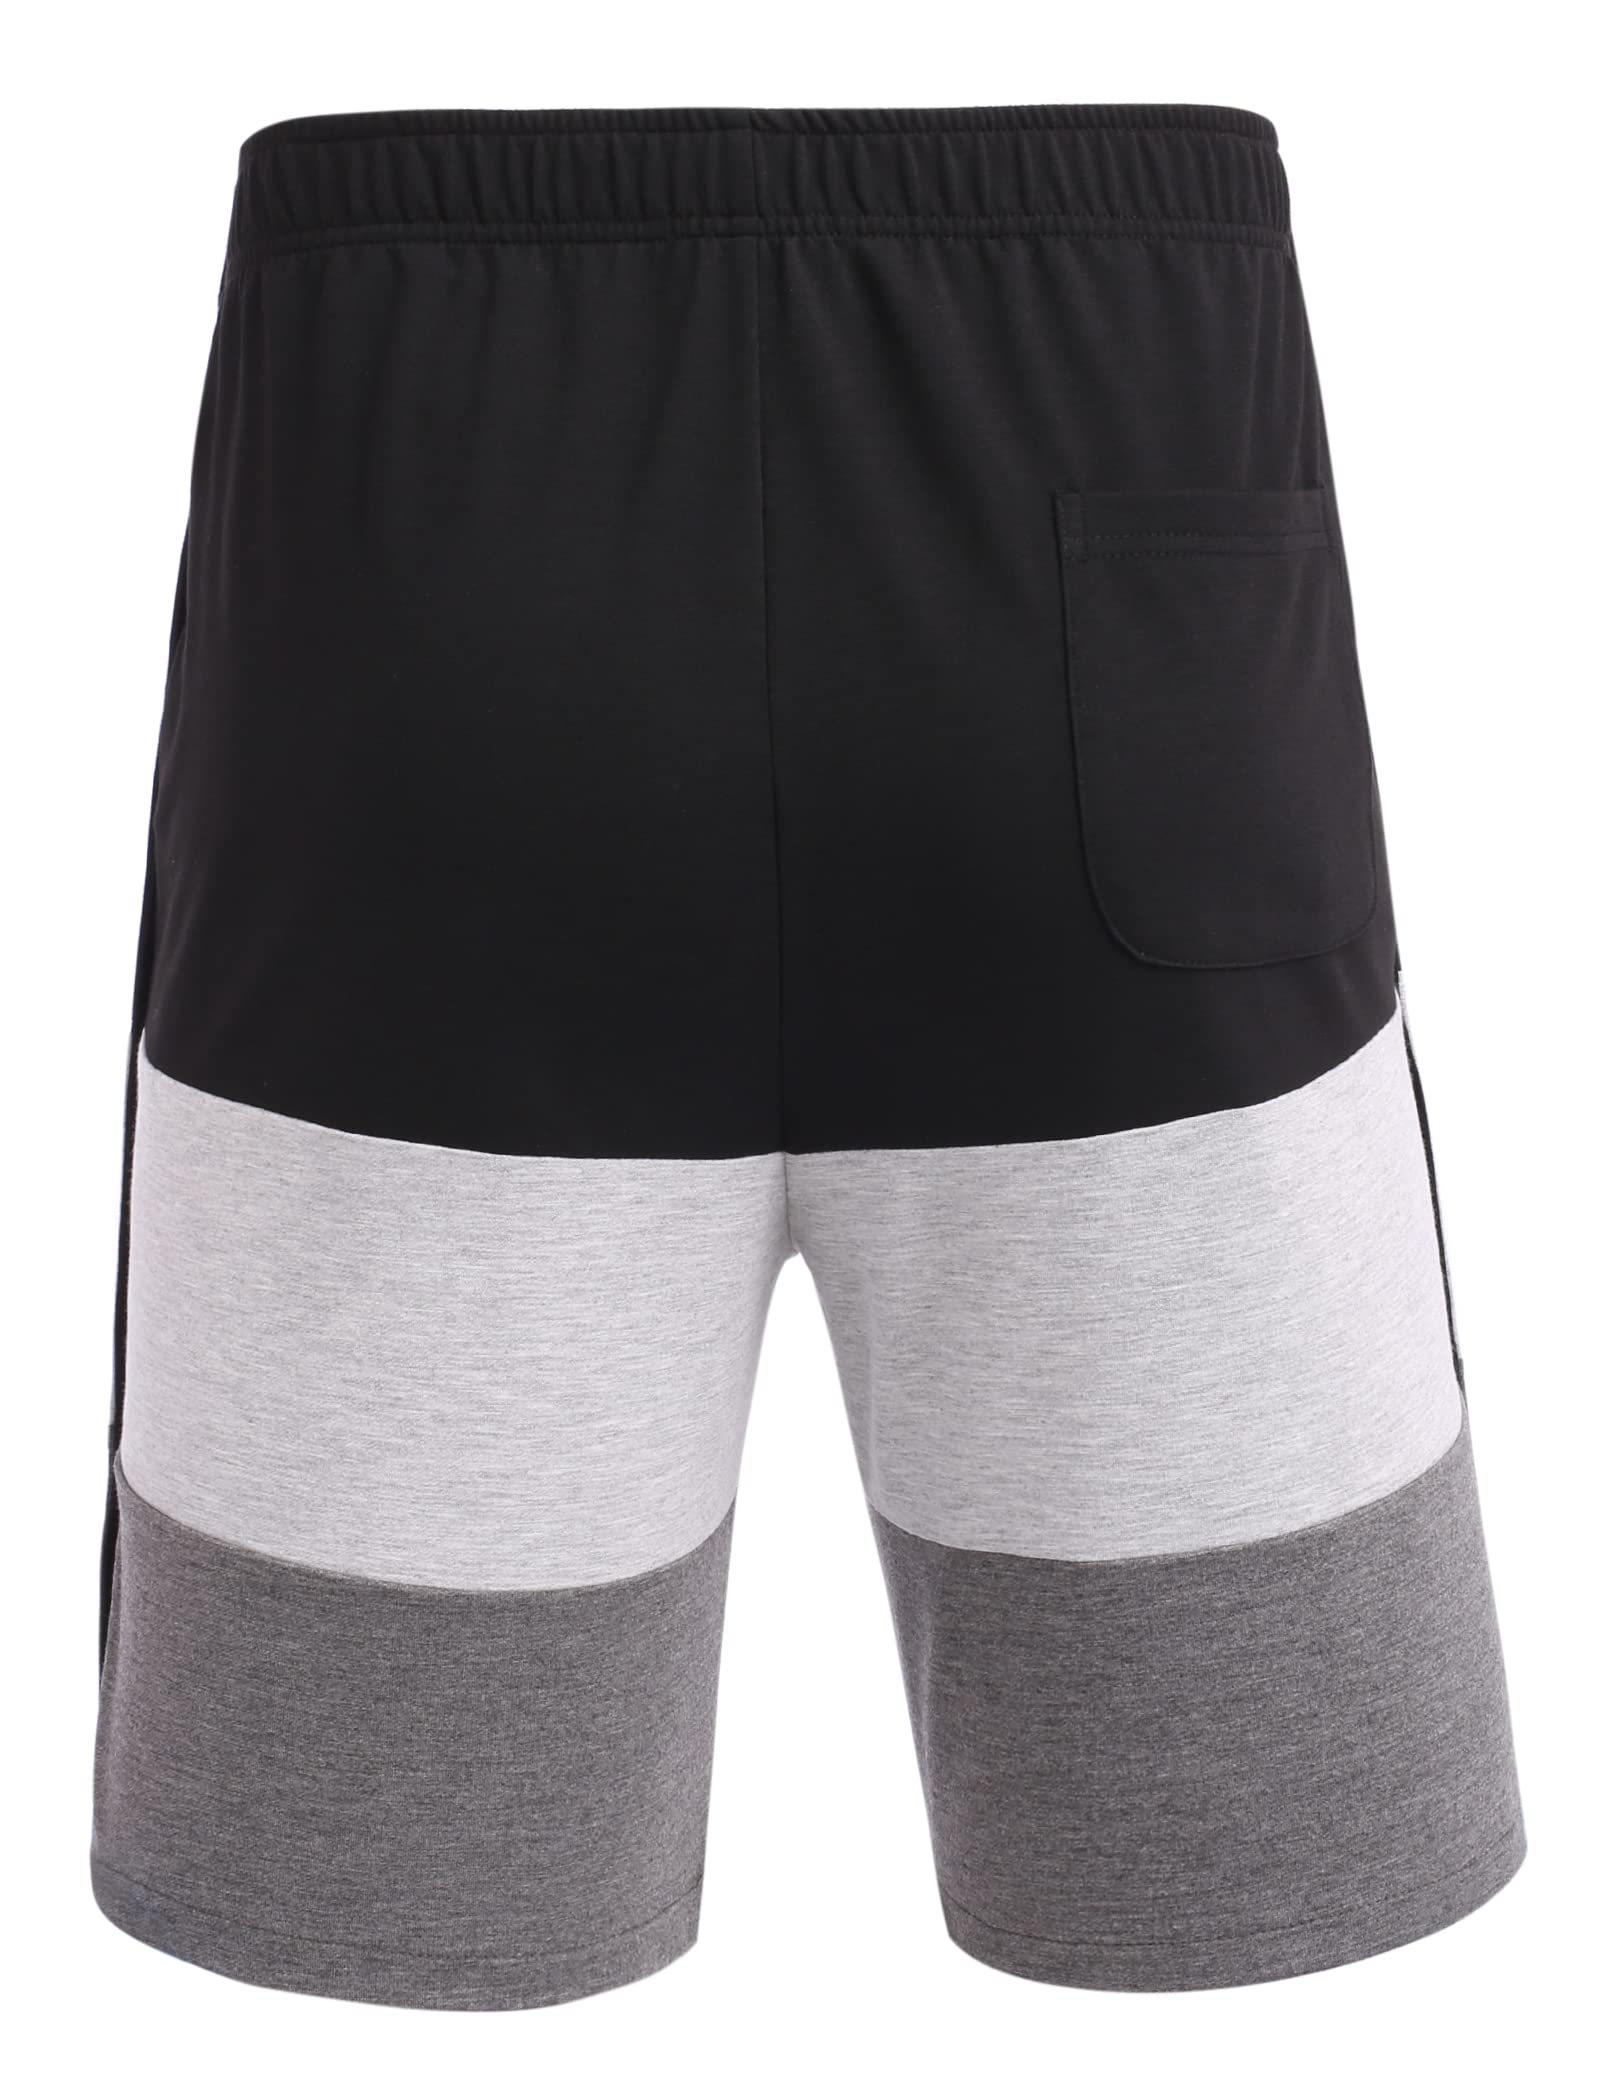 Nike Mens Tearaway Pants - Black | Life Style Sports EU